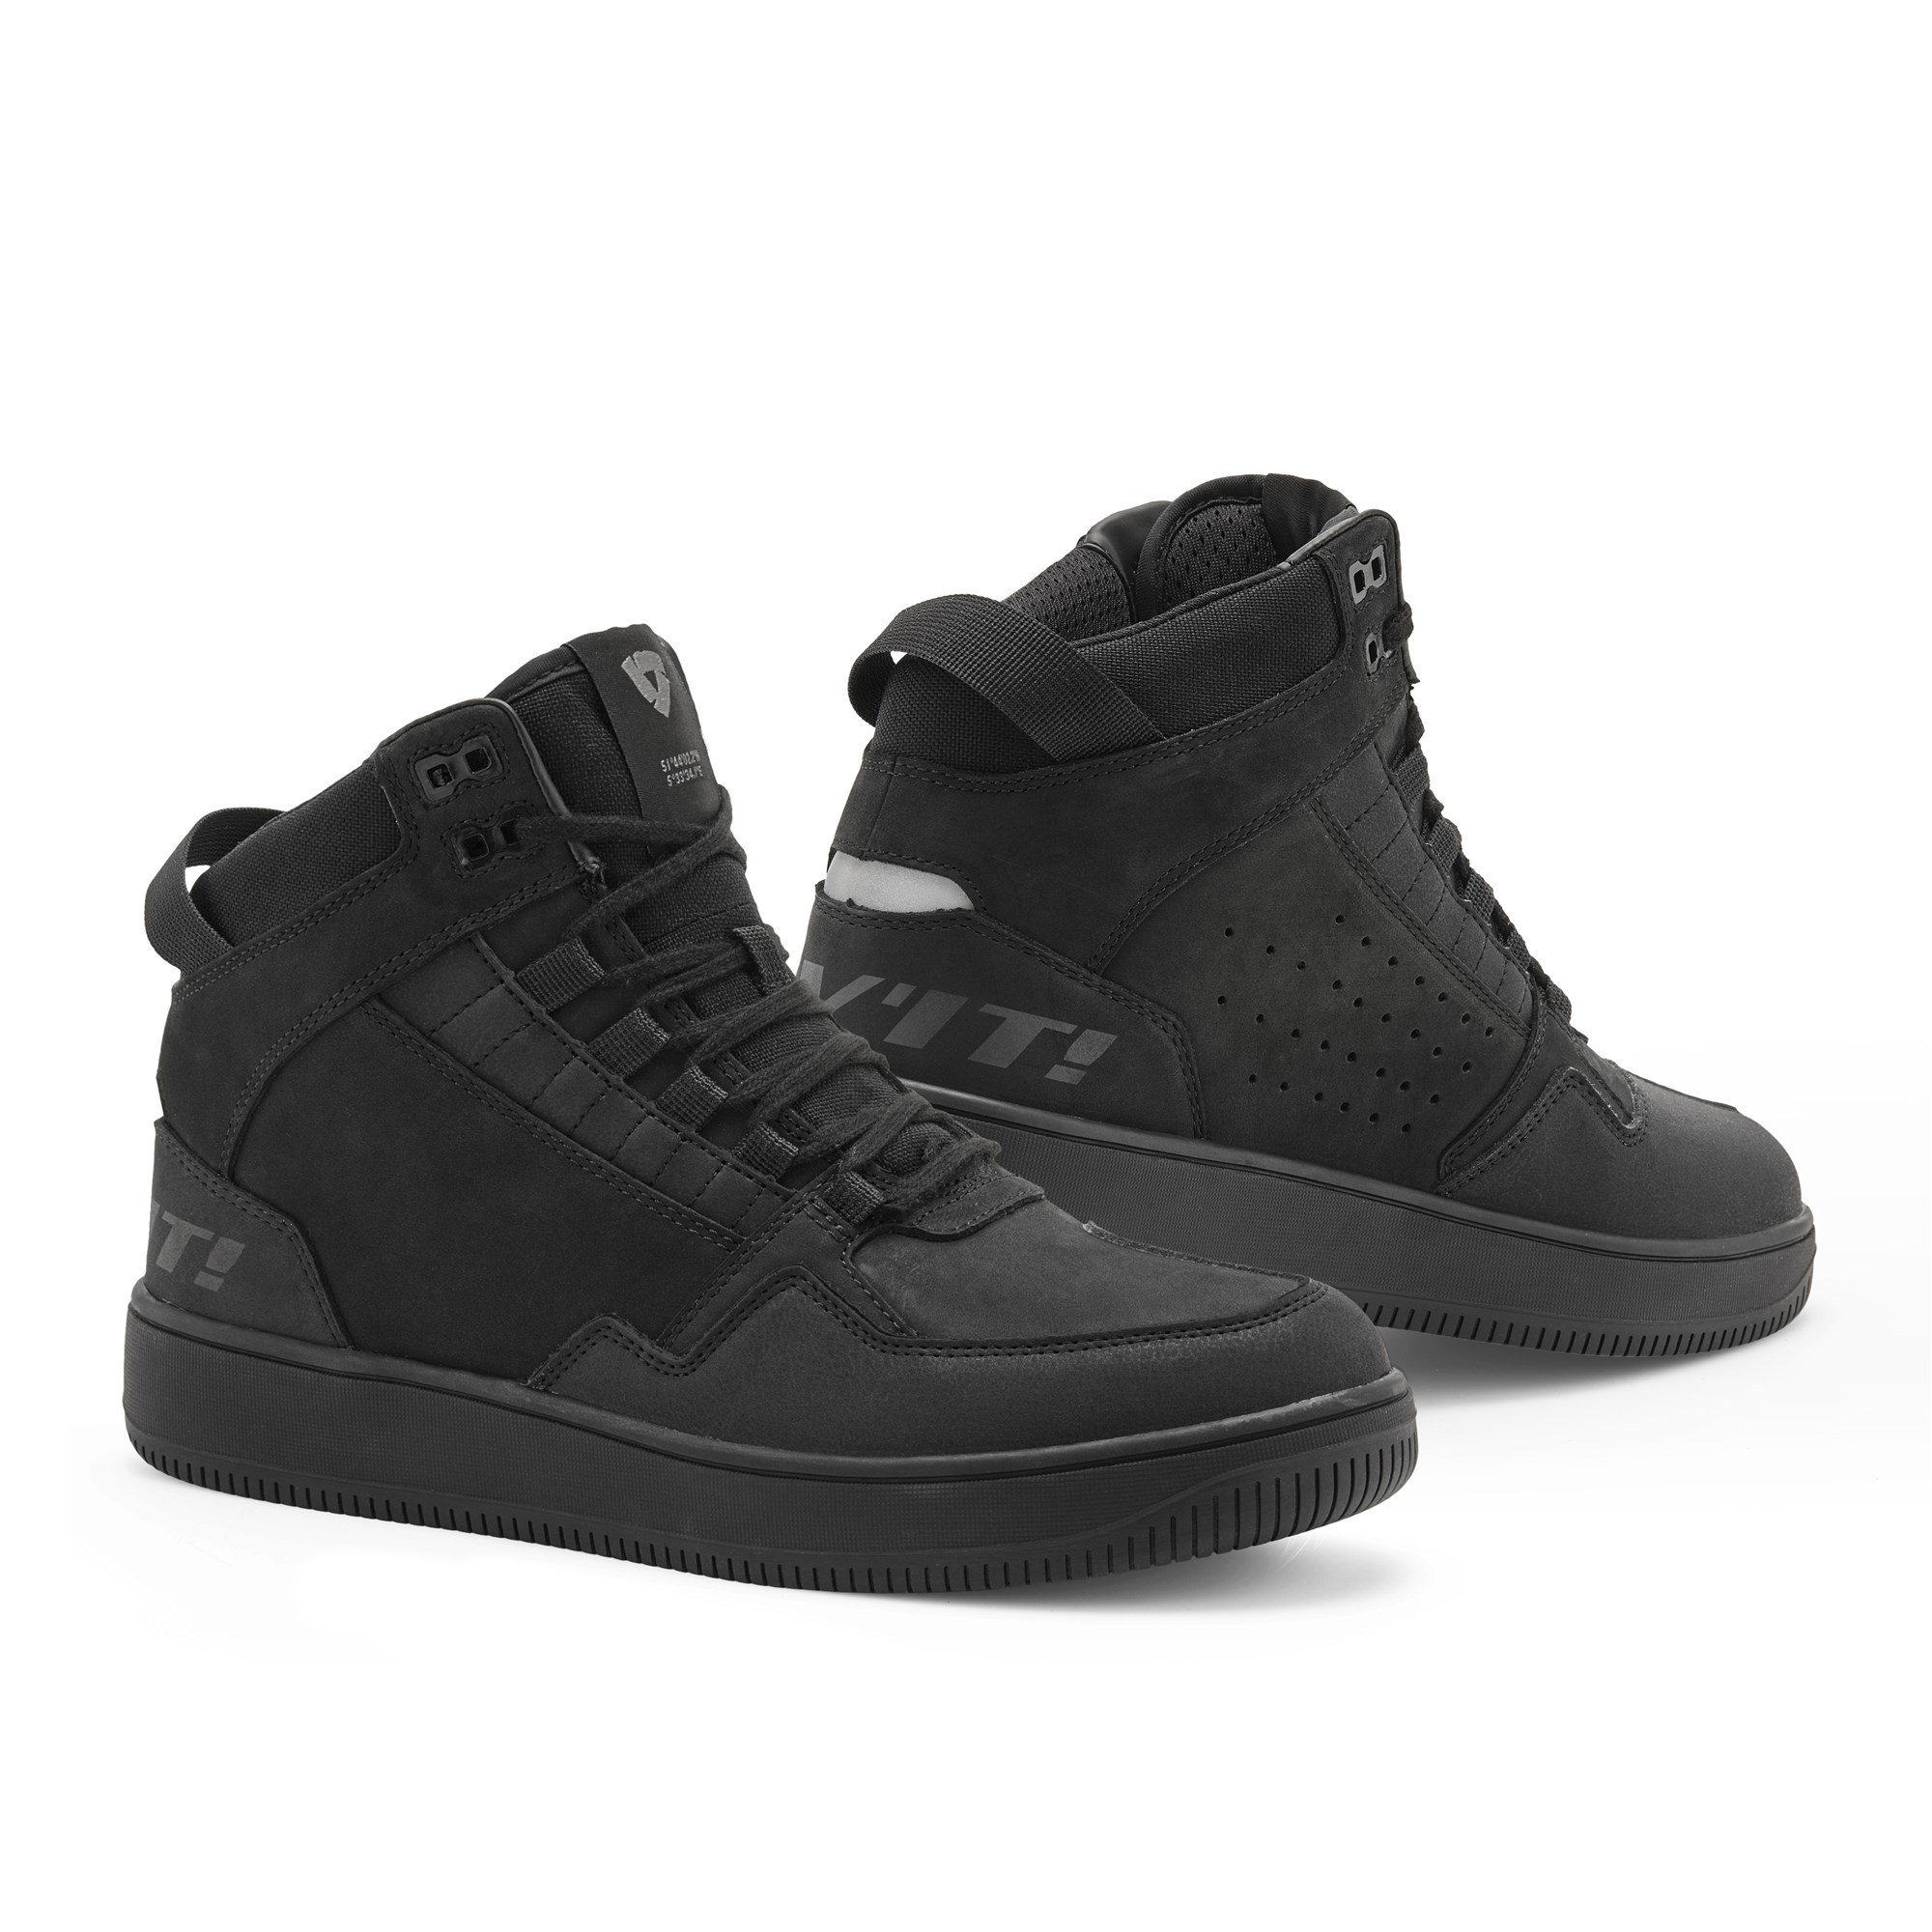 Image of REV'IT! Jefferson Shoes Black Size 45 ID 8700001282116